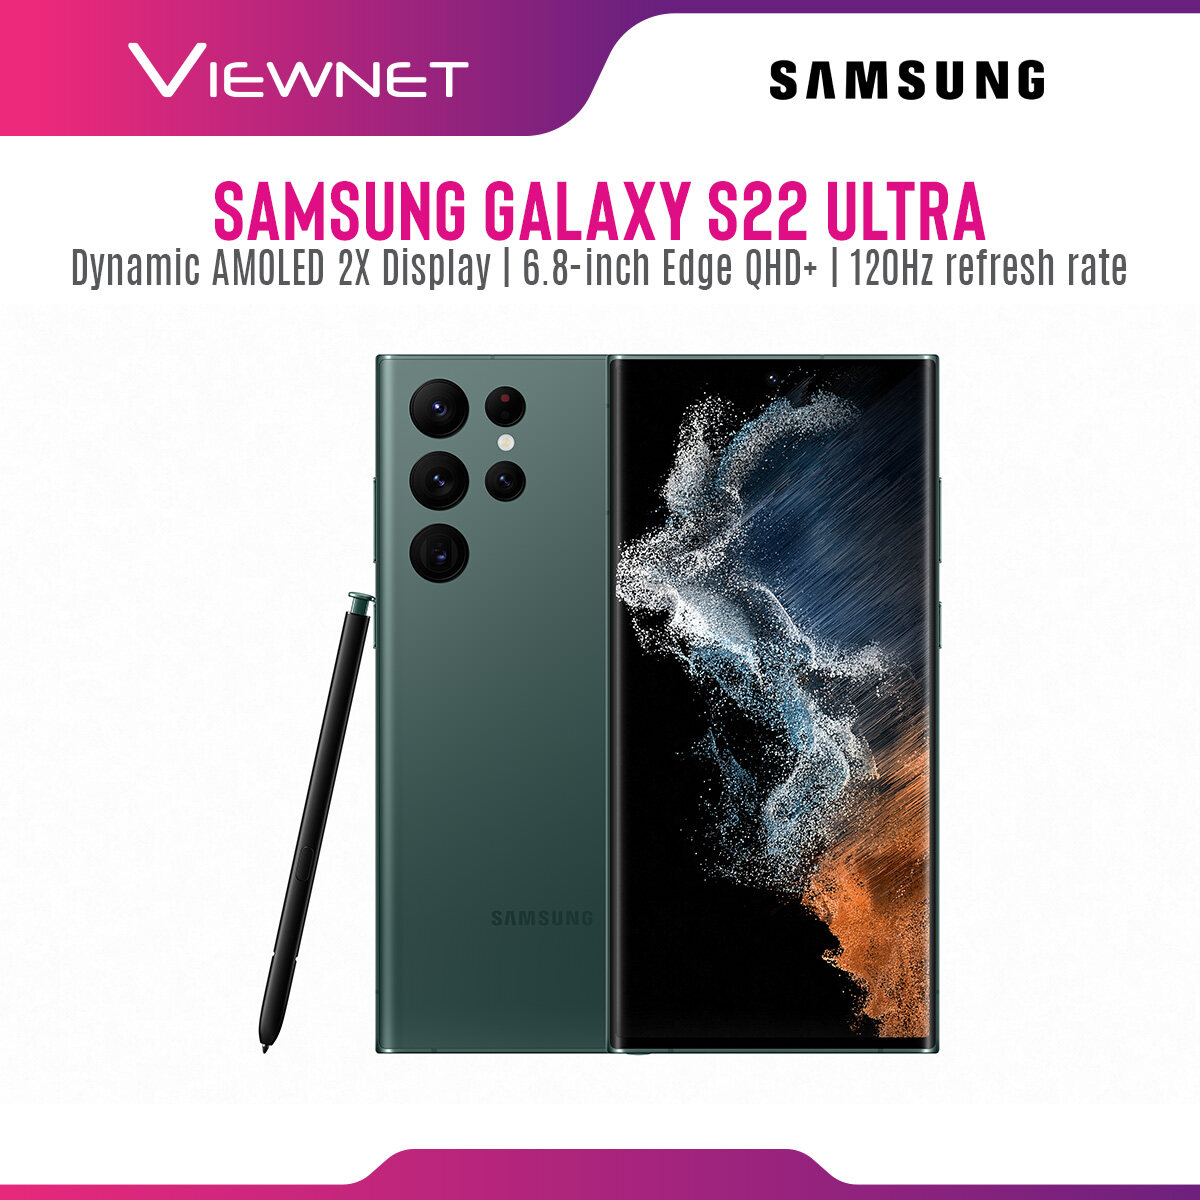 [PRE-ORDER] Samsung Galaxy S22 Ultra 5G Smartphone with Dynamic AMOLED 2X Display, 6.8-inch Edge QHD+, 120Hz Refresh Rate, 5500mAh Battery (ETA : 2022-03-03)